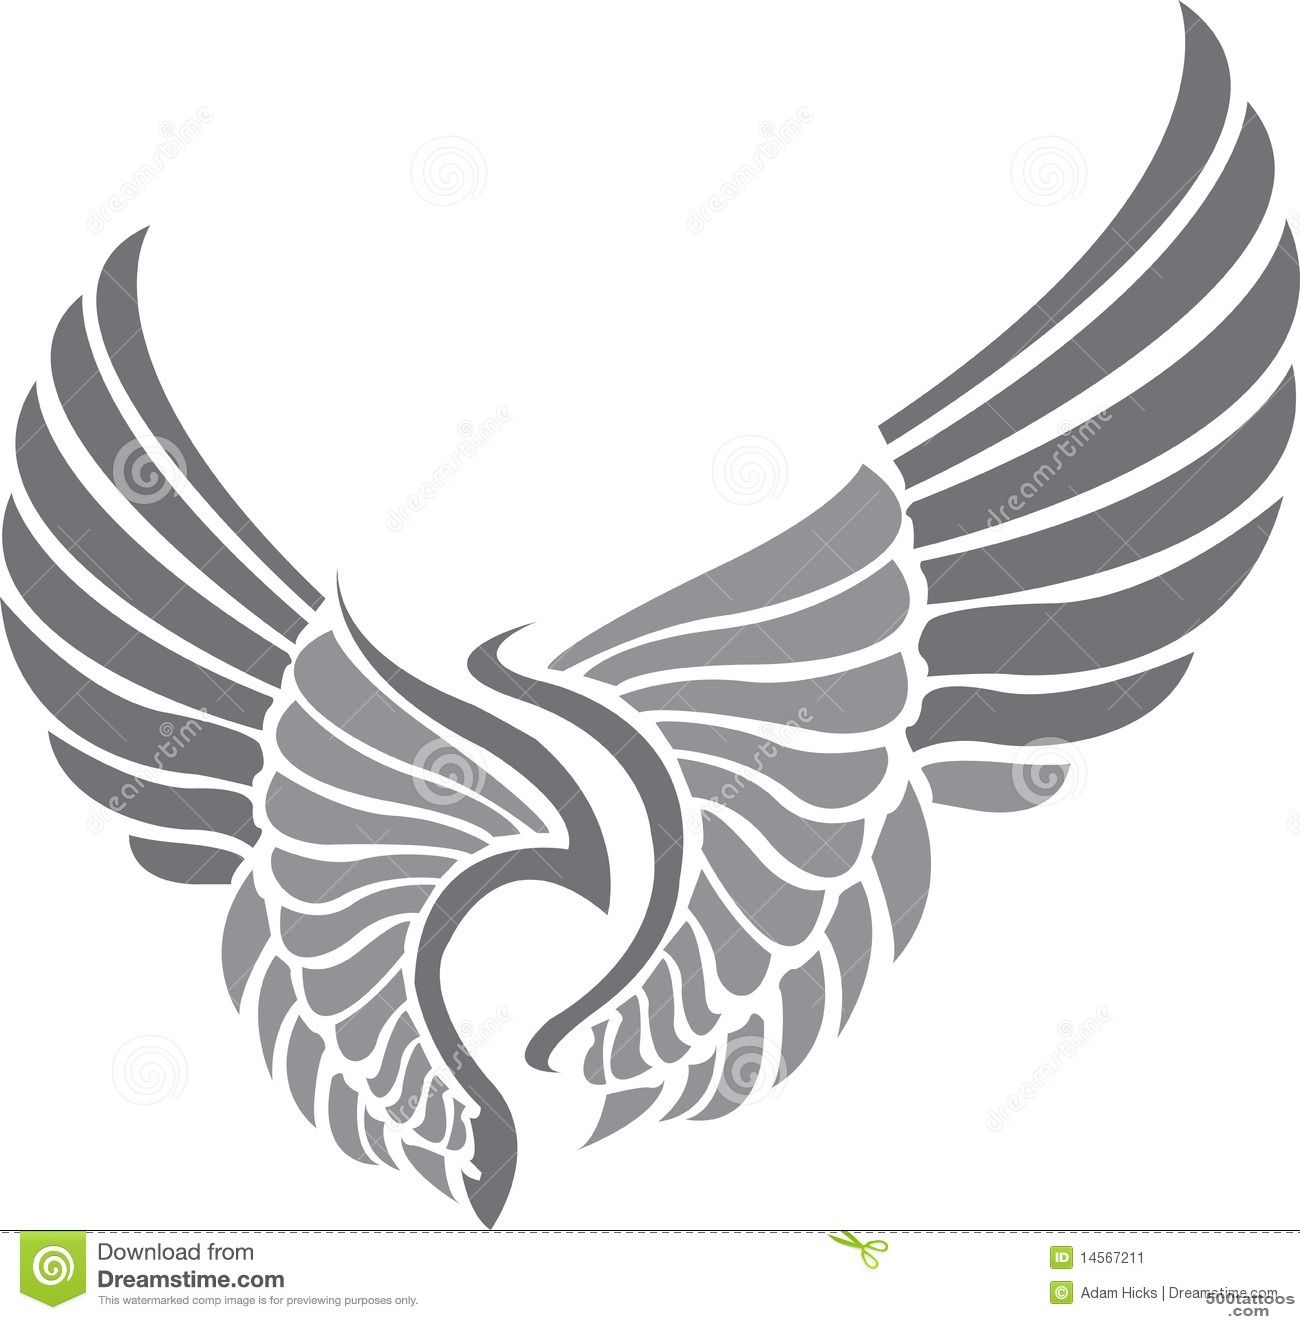 Tattoo Wings Stock Image   Image 14567211_38